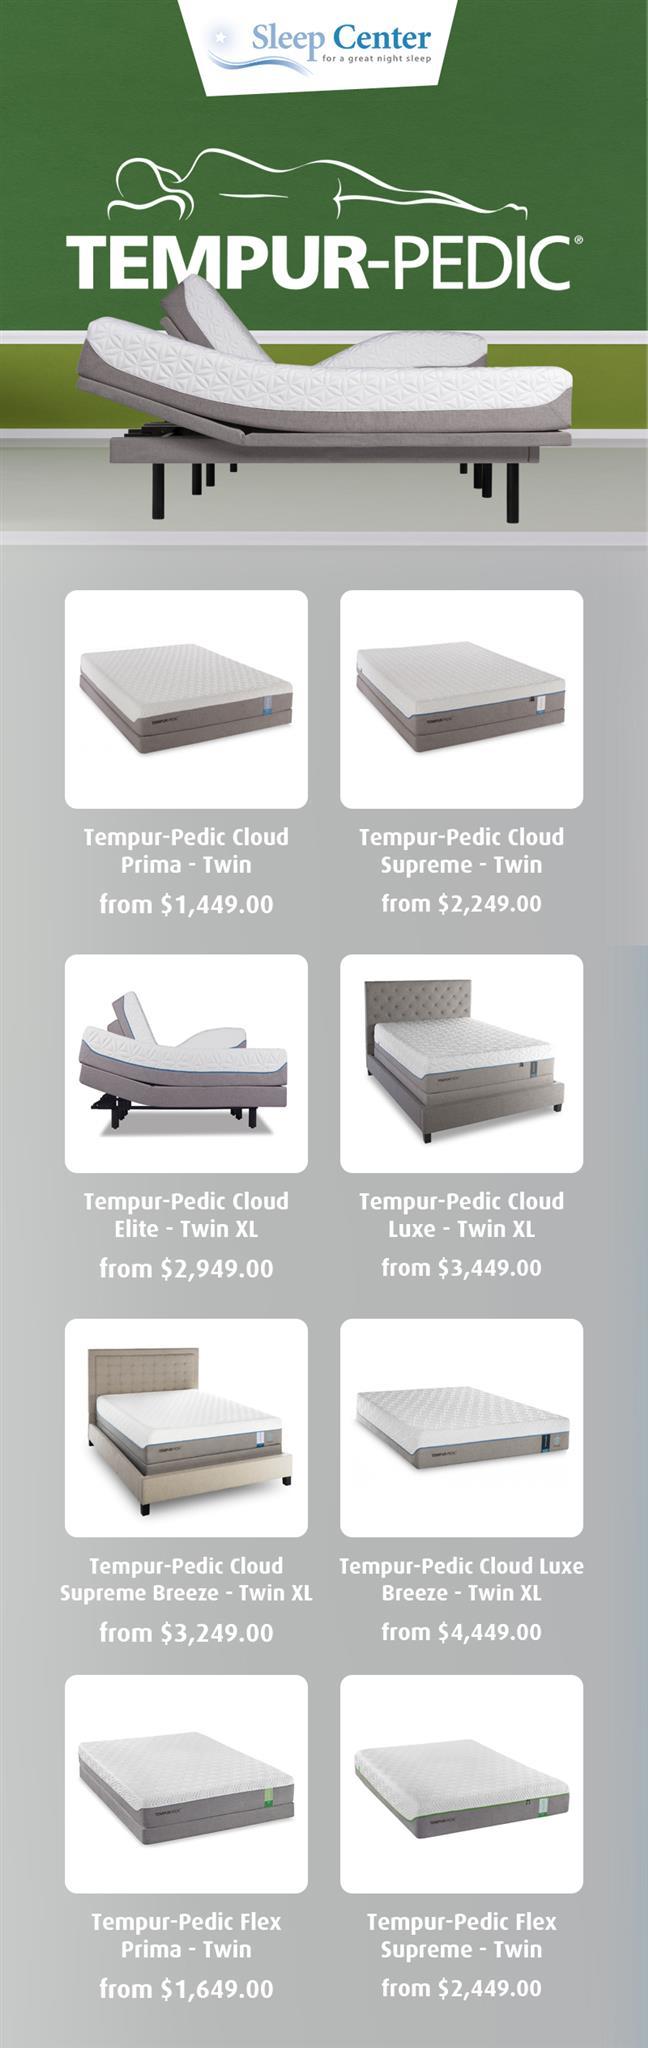 Shop Top Quality & Comfortable Tempurpedic Mattresses Online from Sleep Center